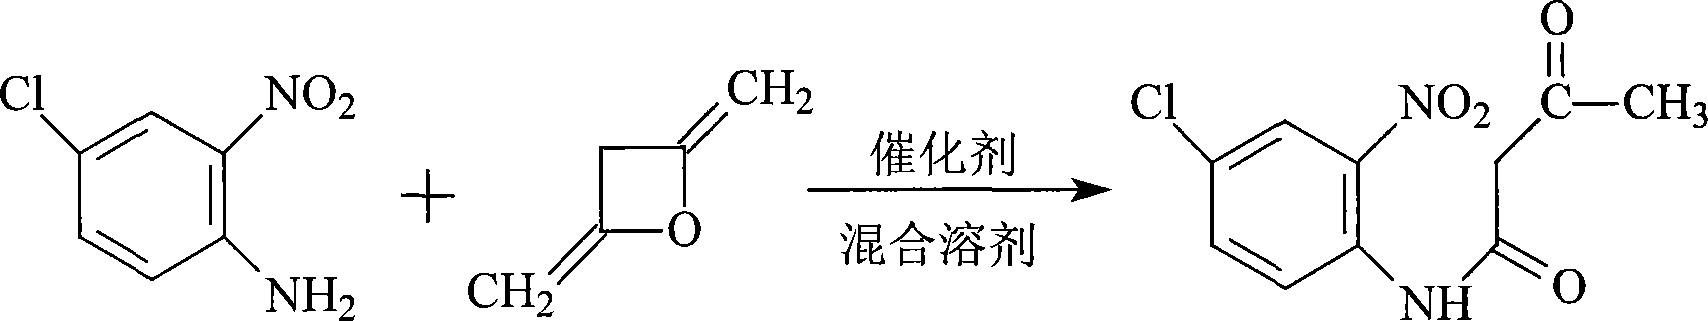 Method for preparing high-purity p-chloro-m-nitroacetoacetanilide